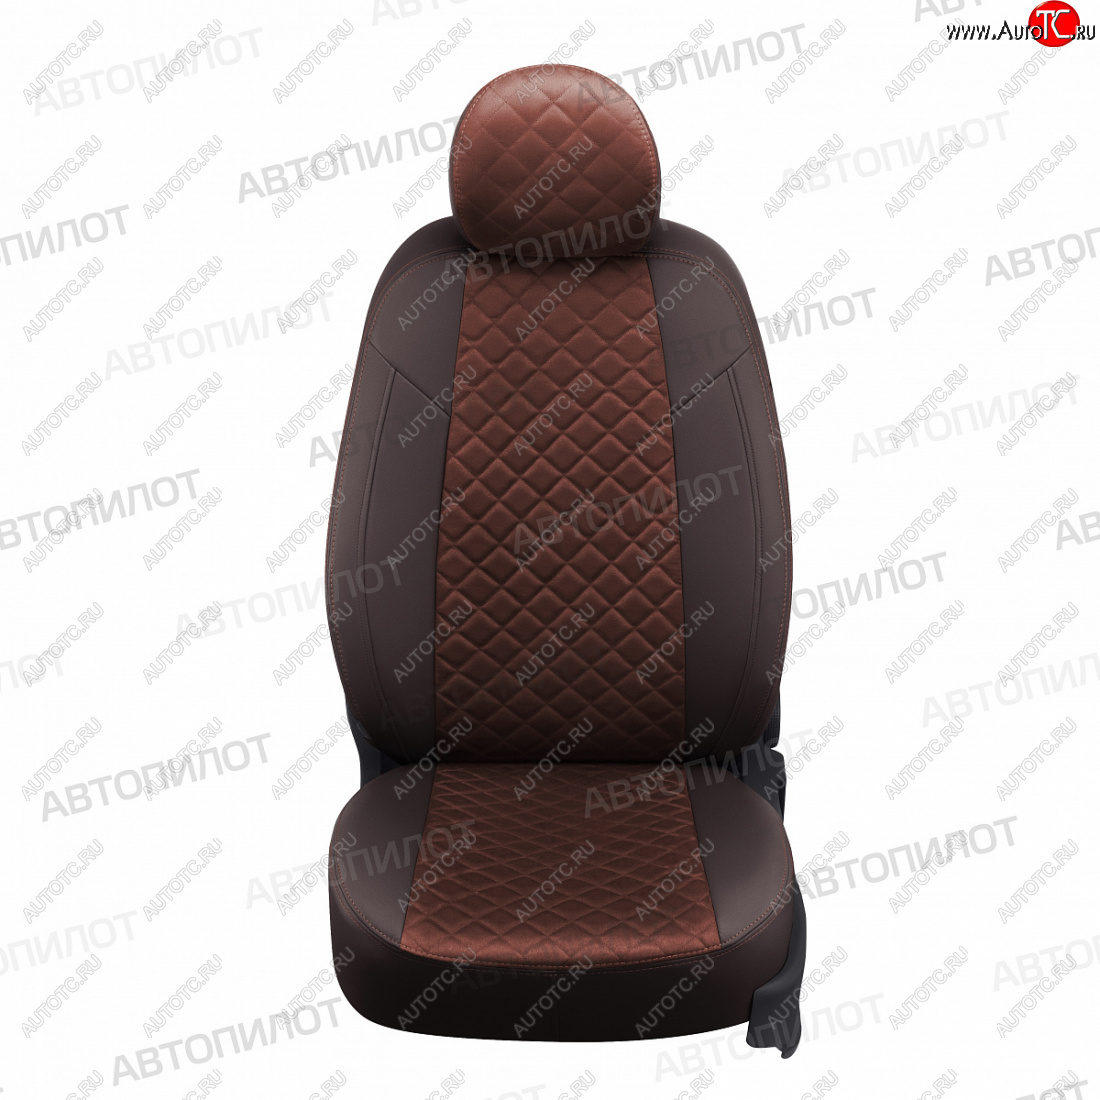 21 599 р. Чехлы сидений (экокожа/алькантара, 9 мест) Автопилот Ромб  Hyundai Starex/H1  A1 (1997-2007) (шоколад)